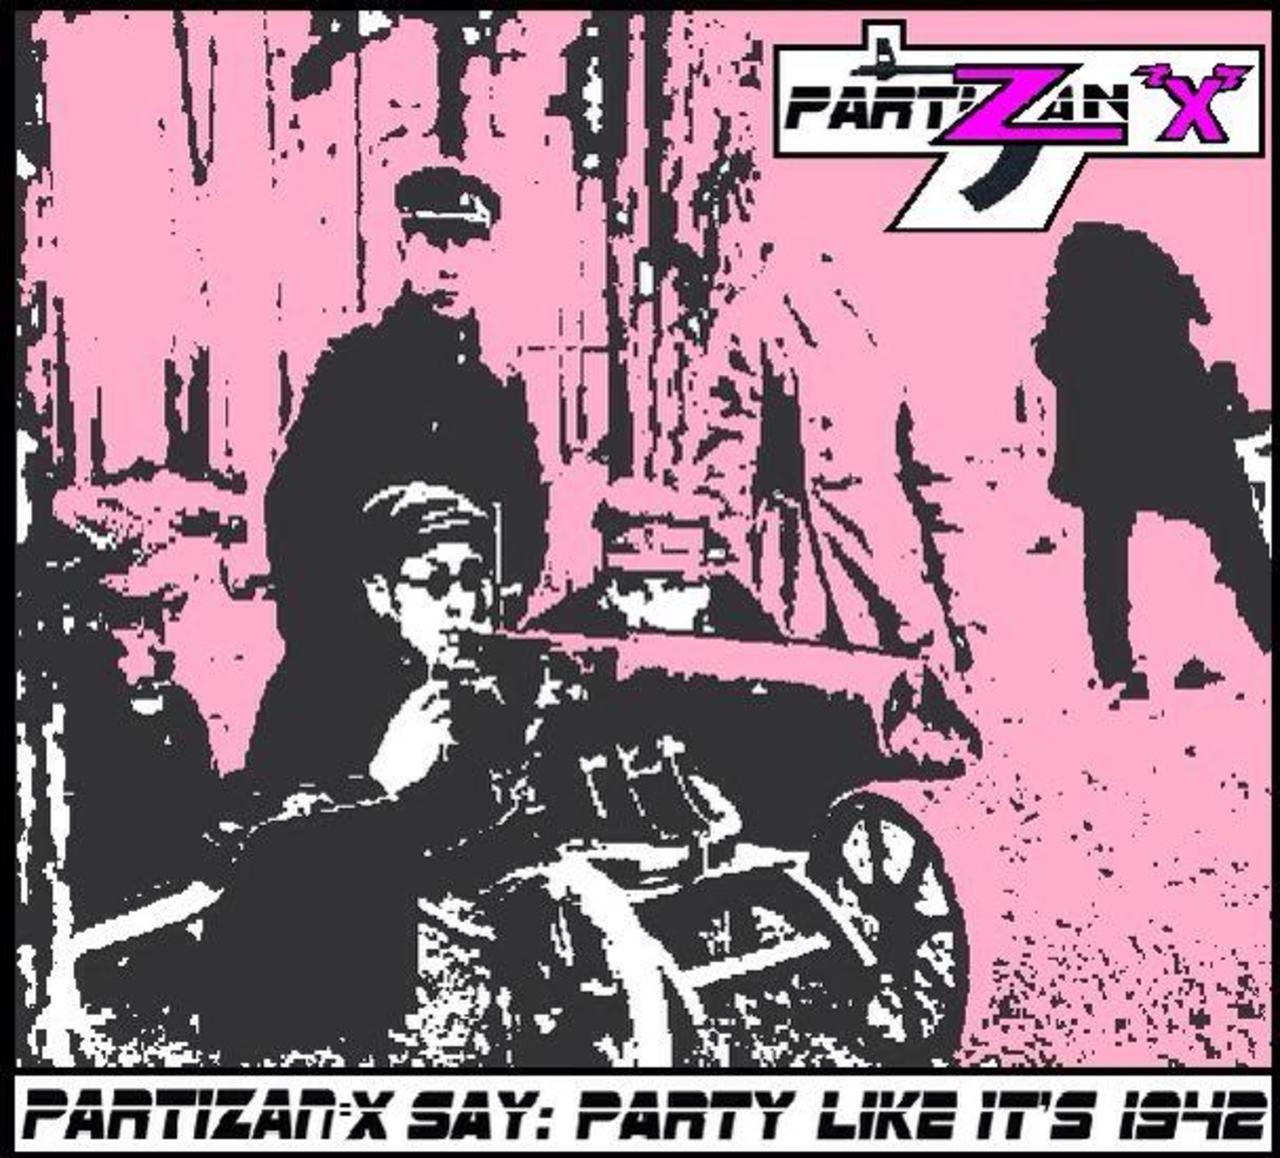 RT @partizan_x: Partizan X say: Party like it's 1942.
@partizan_x #streetart #stickerart #stickers #stickerbomb #poximity #graffiti http://t.co/Fp195DnmXR